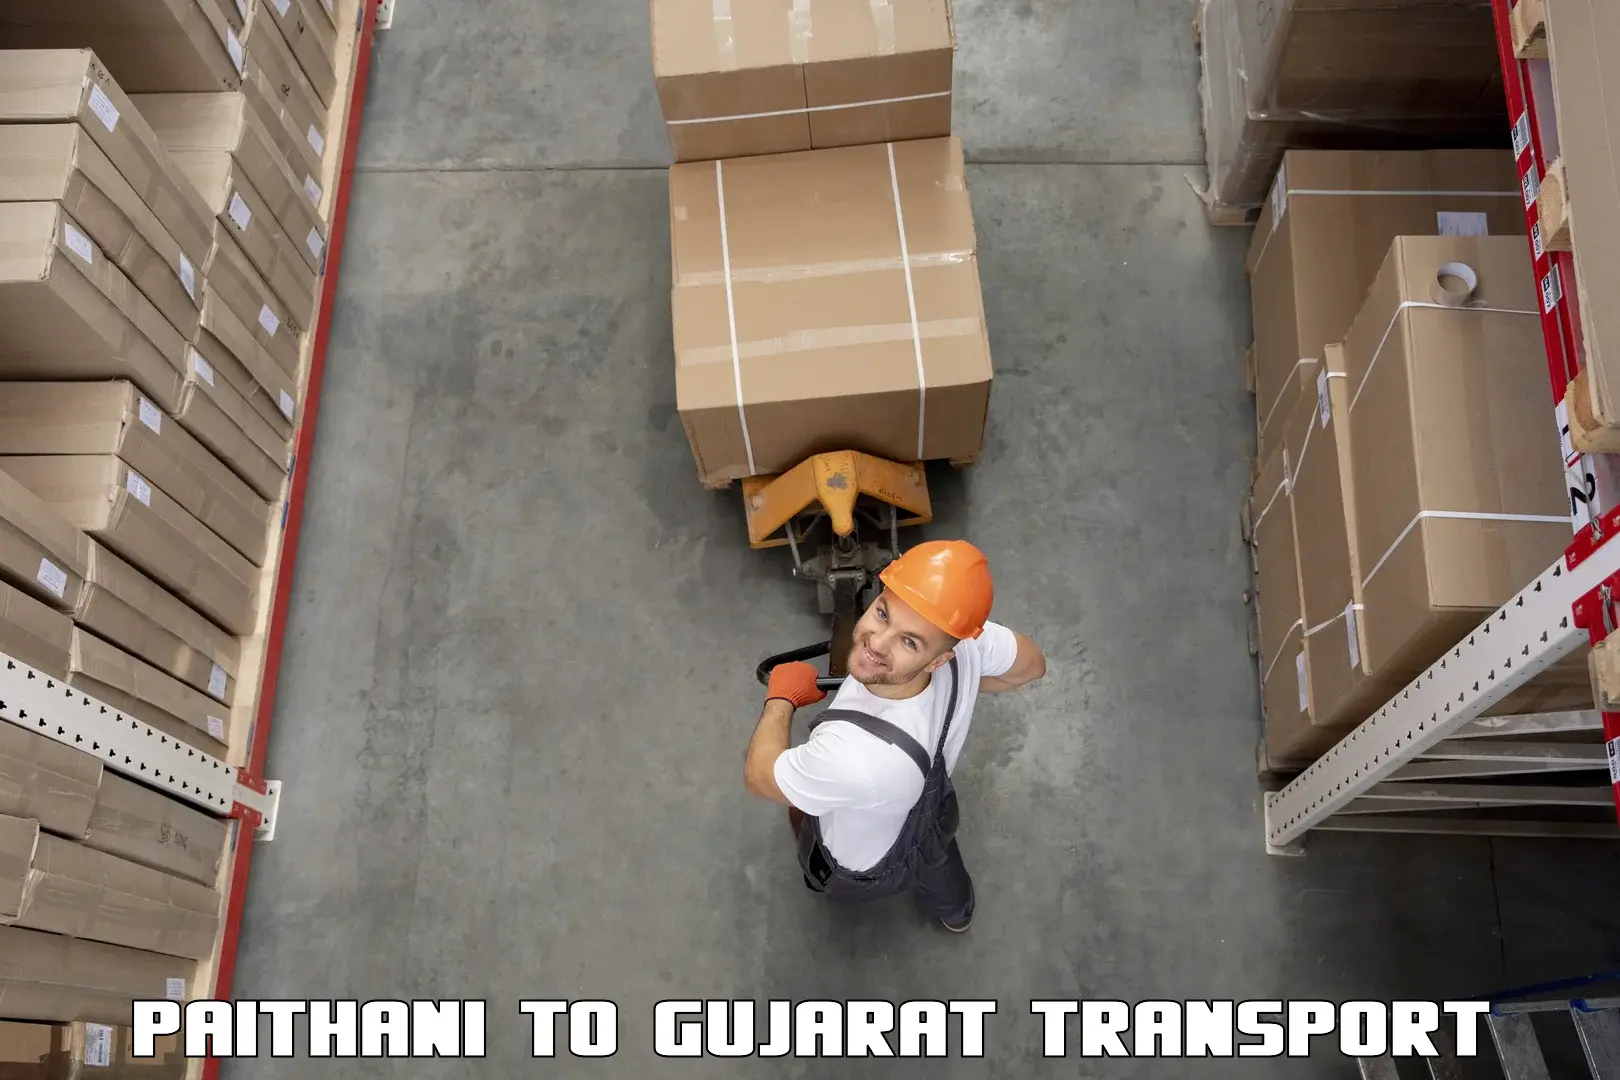 Daily transport service Paithani to Gujarat